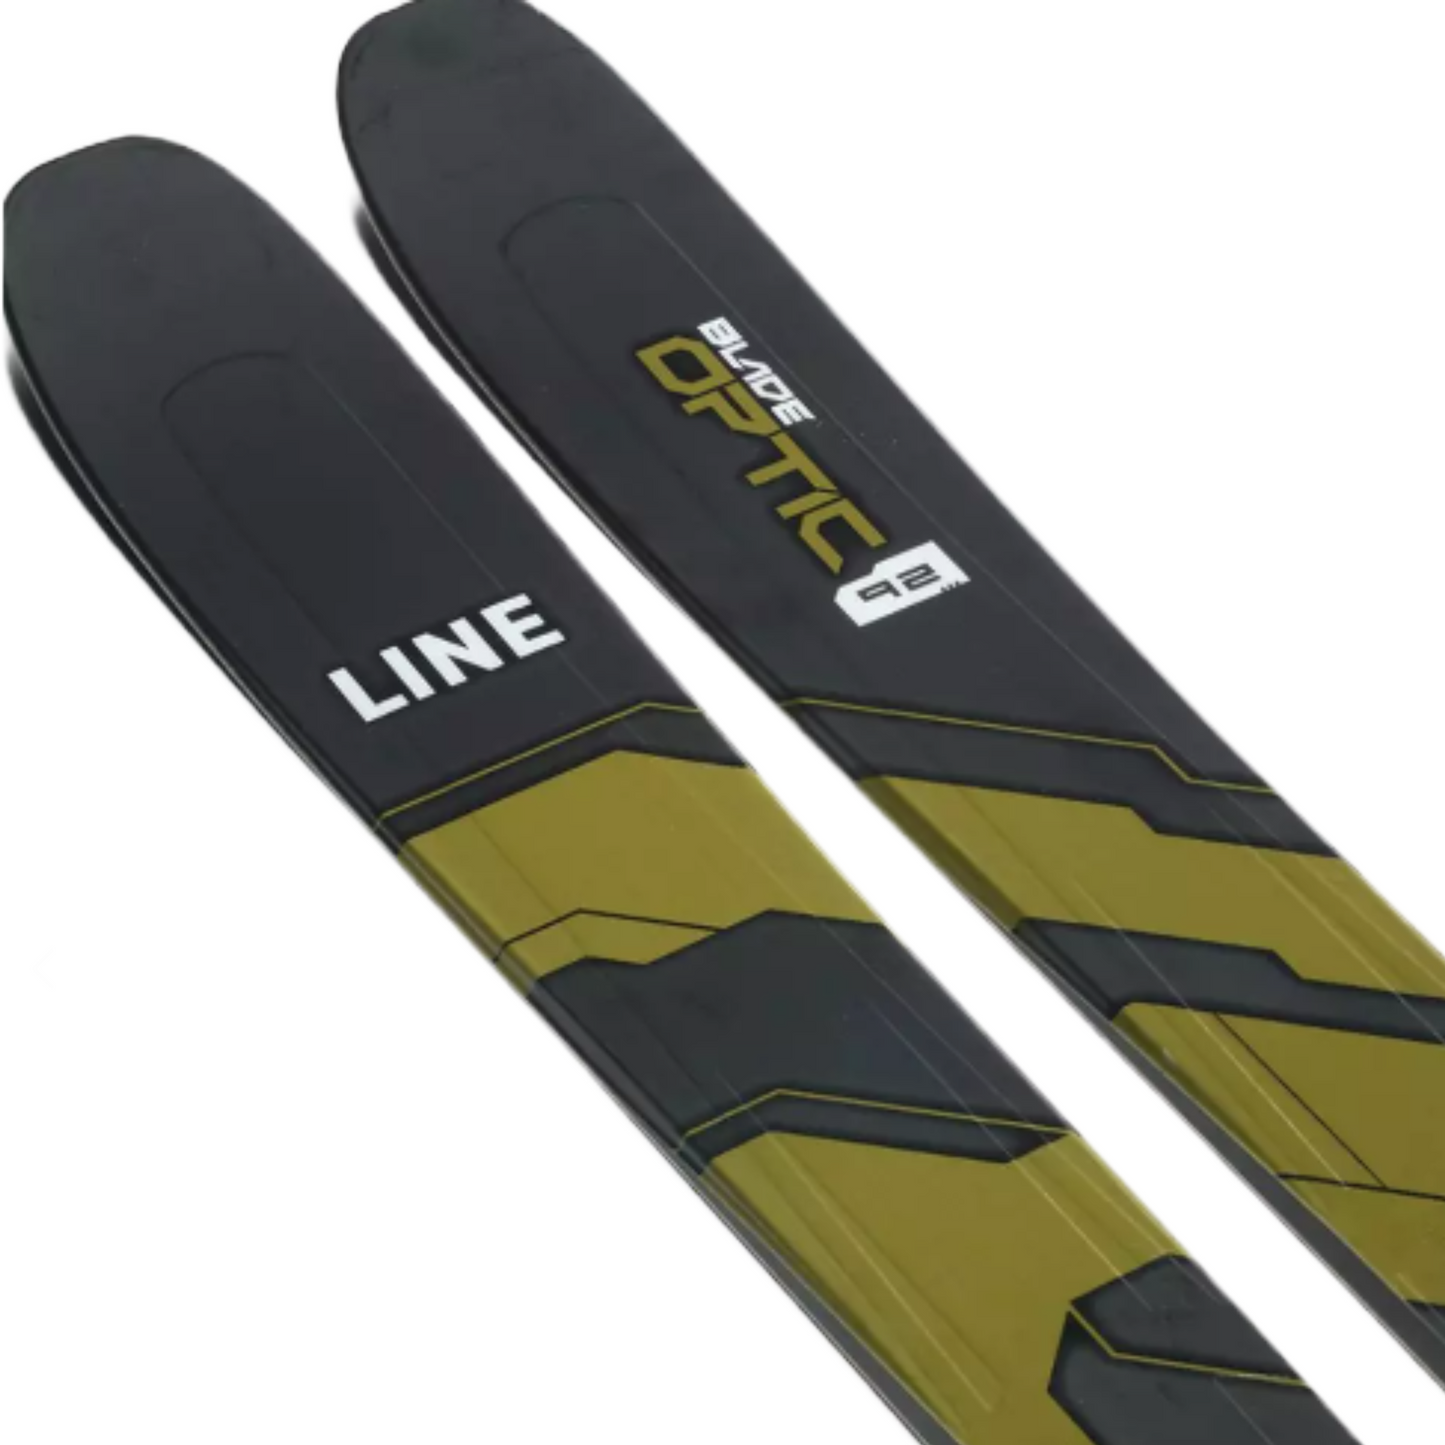 Line Blade Optic 92 All-mountain alpine skis